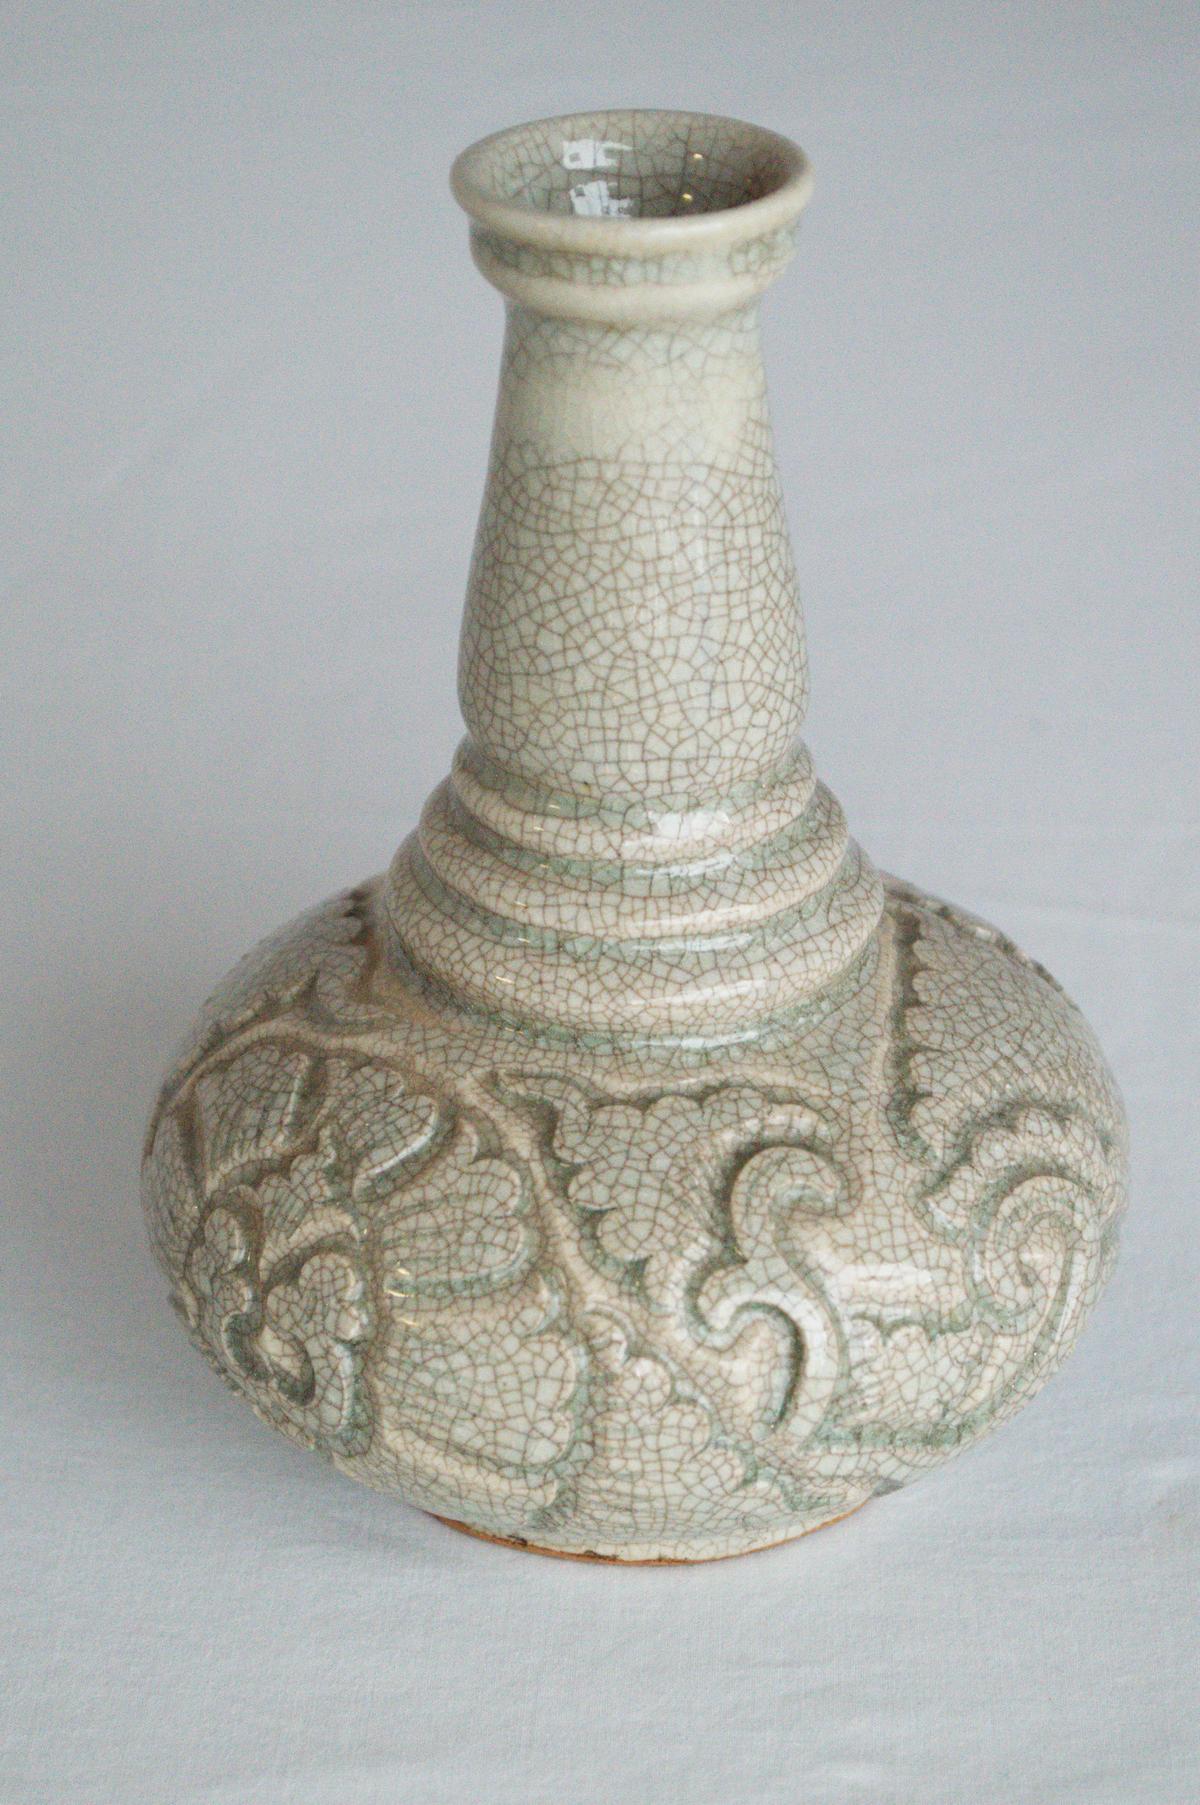 Crackled Design Vase With Thin Neck